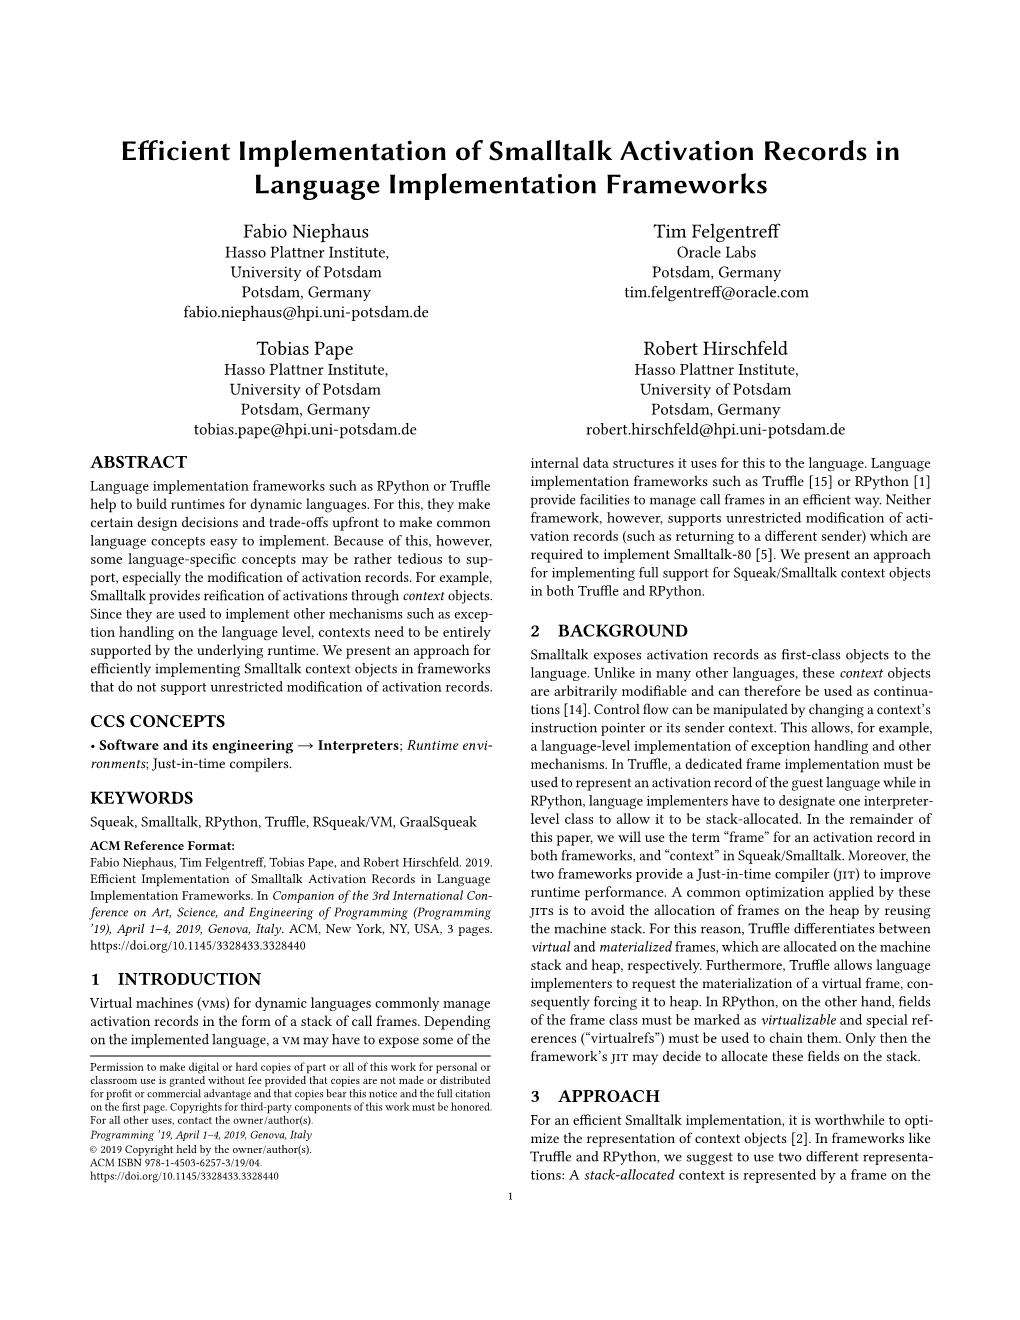 Efficient Implementation of Smalltalk Activation Records in Language Implementation Frameworks